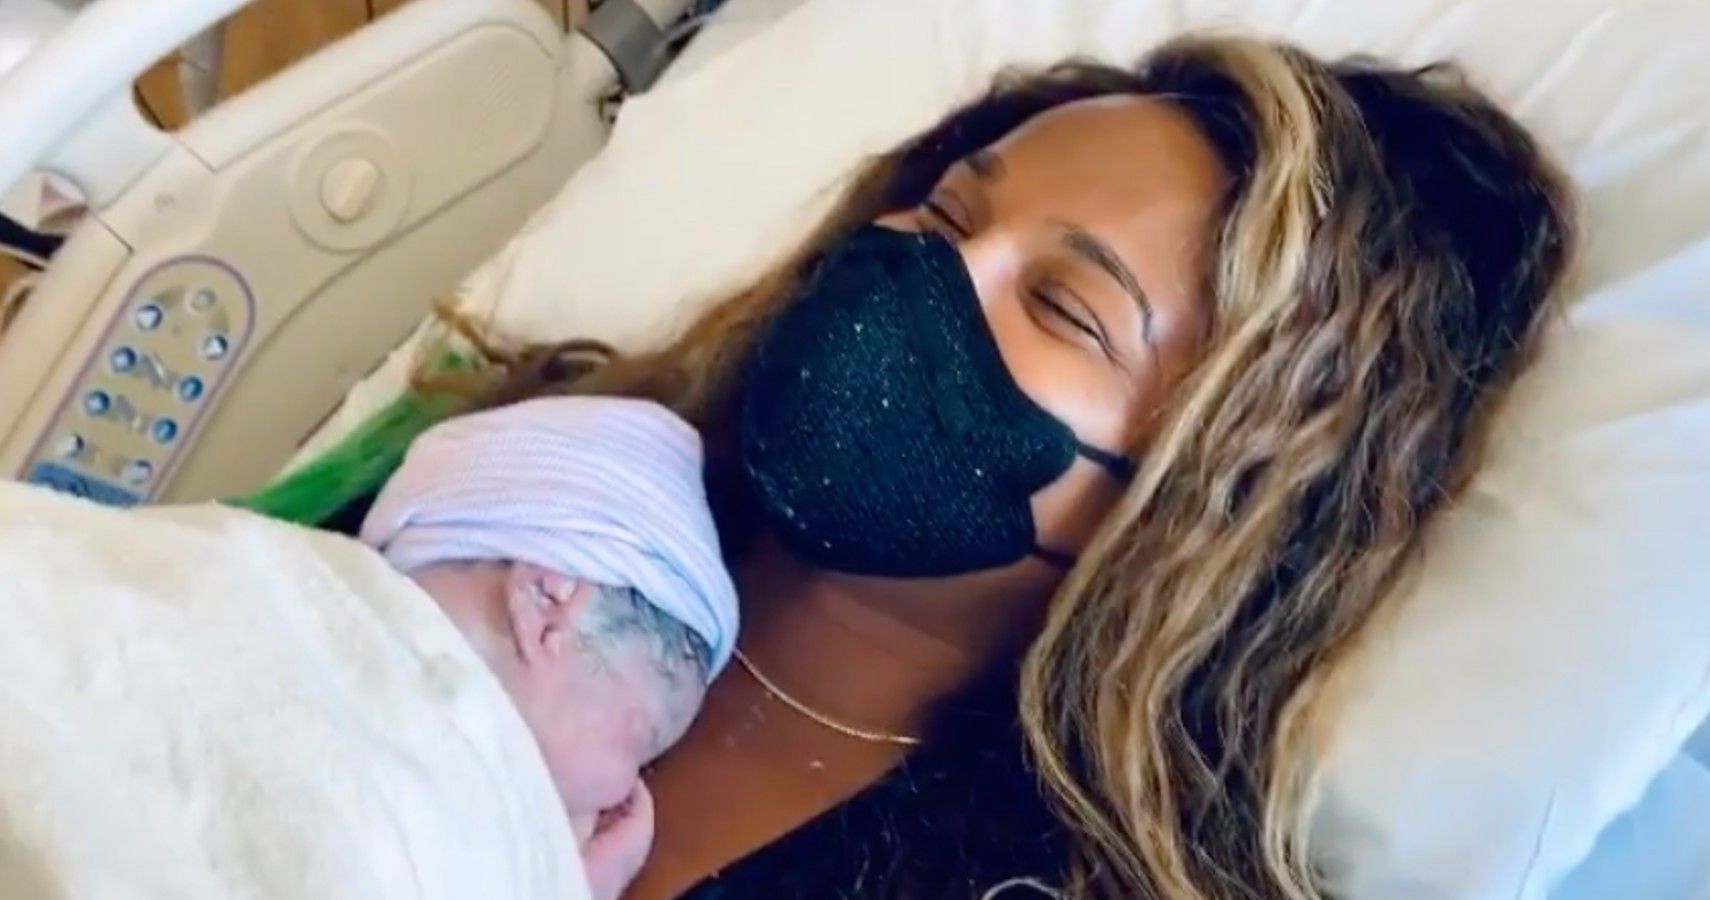 Ciara Wearing Mask While Giving Birth Coronavirus